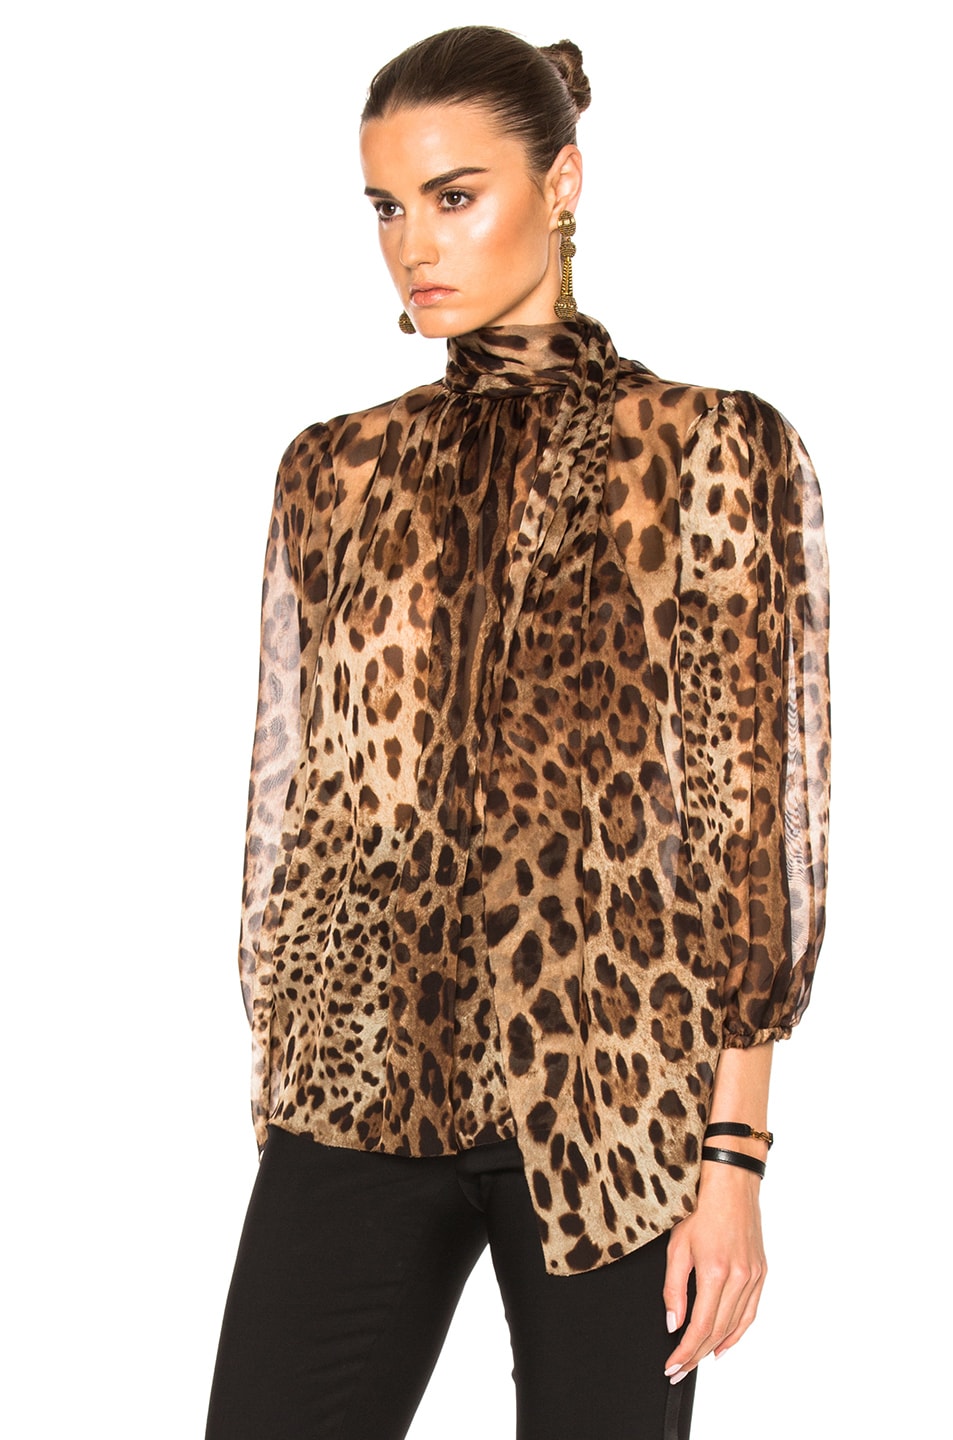 Dolce & Gabbana Chiffon Leopard Print Blouse in Natural | FWRD